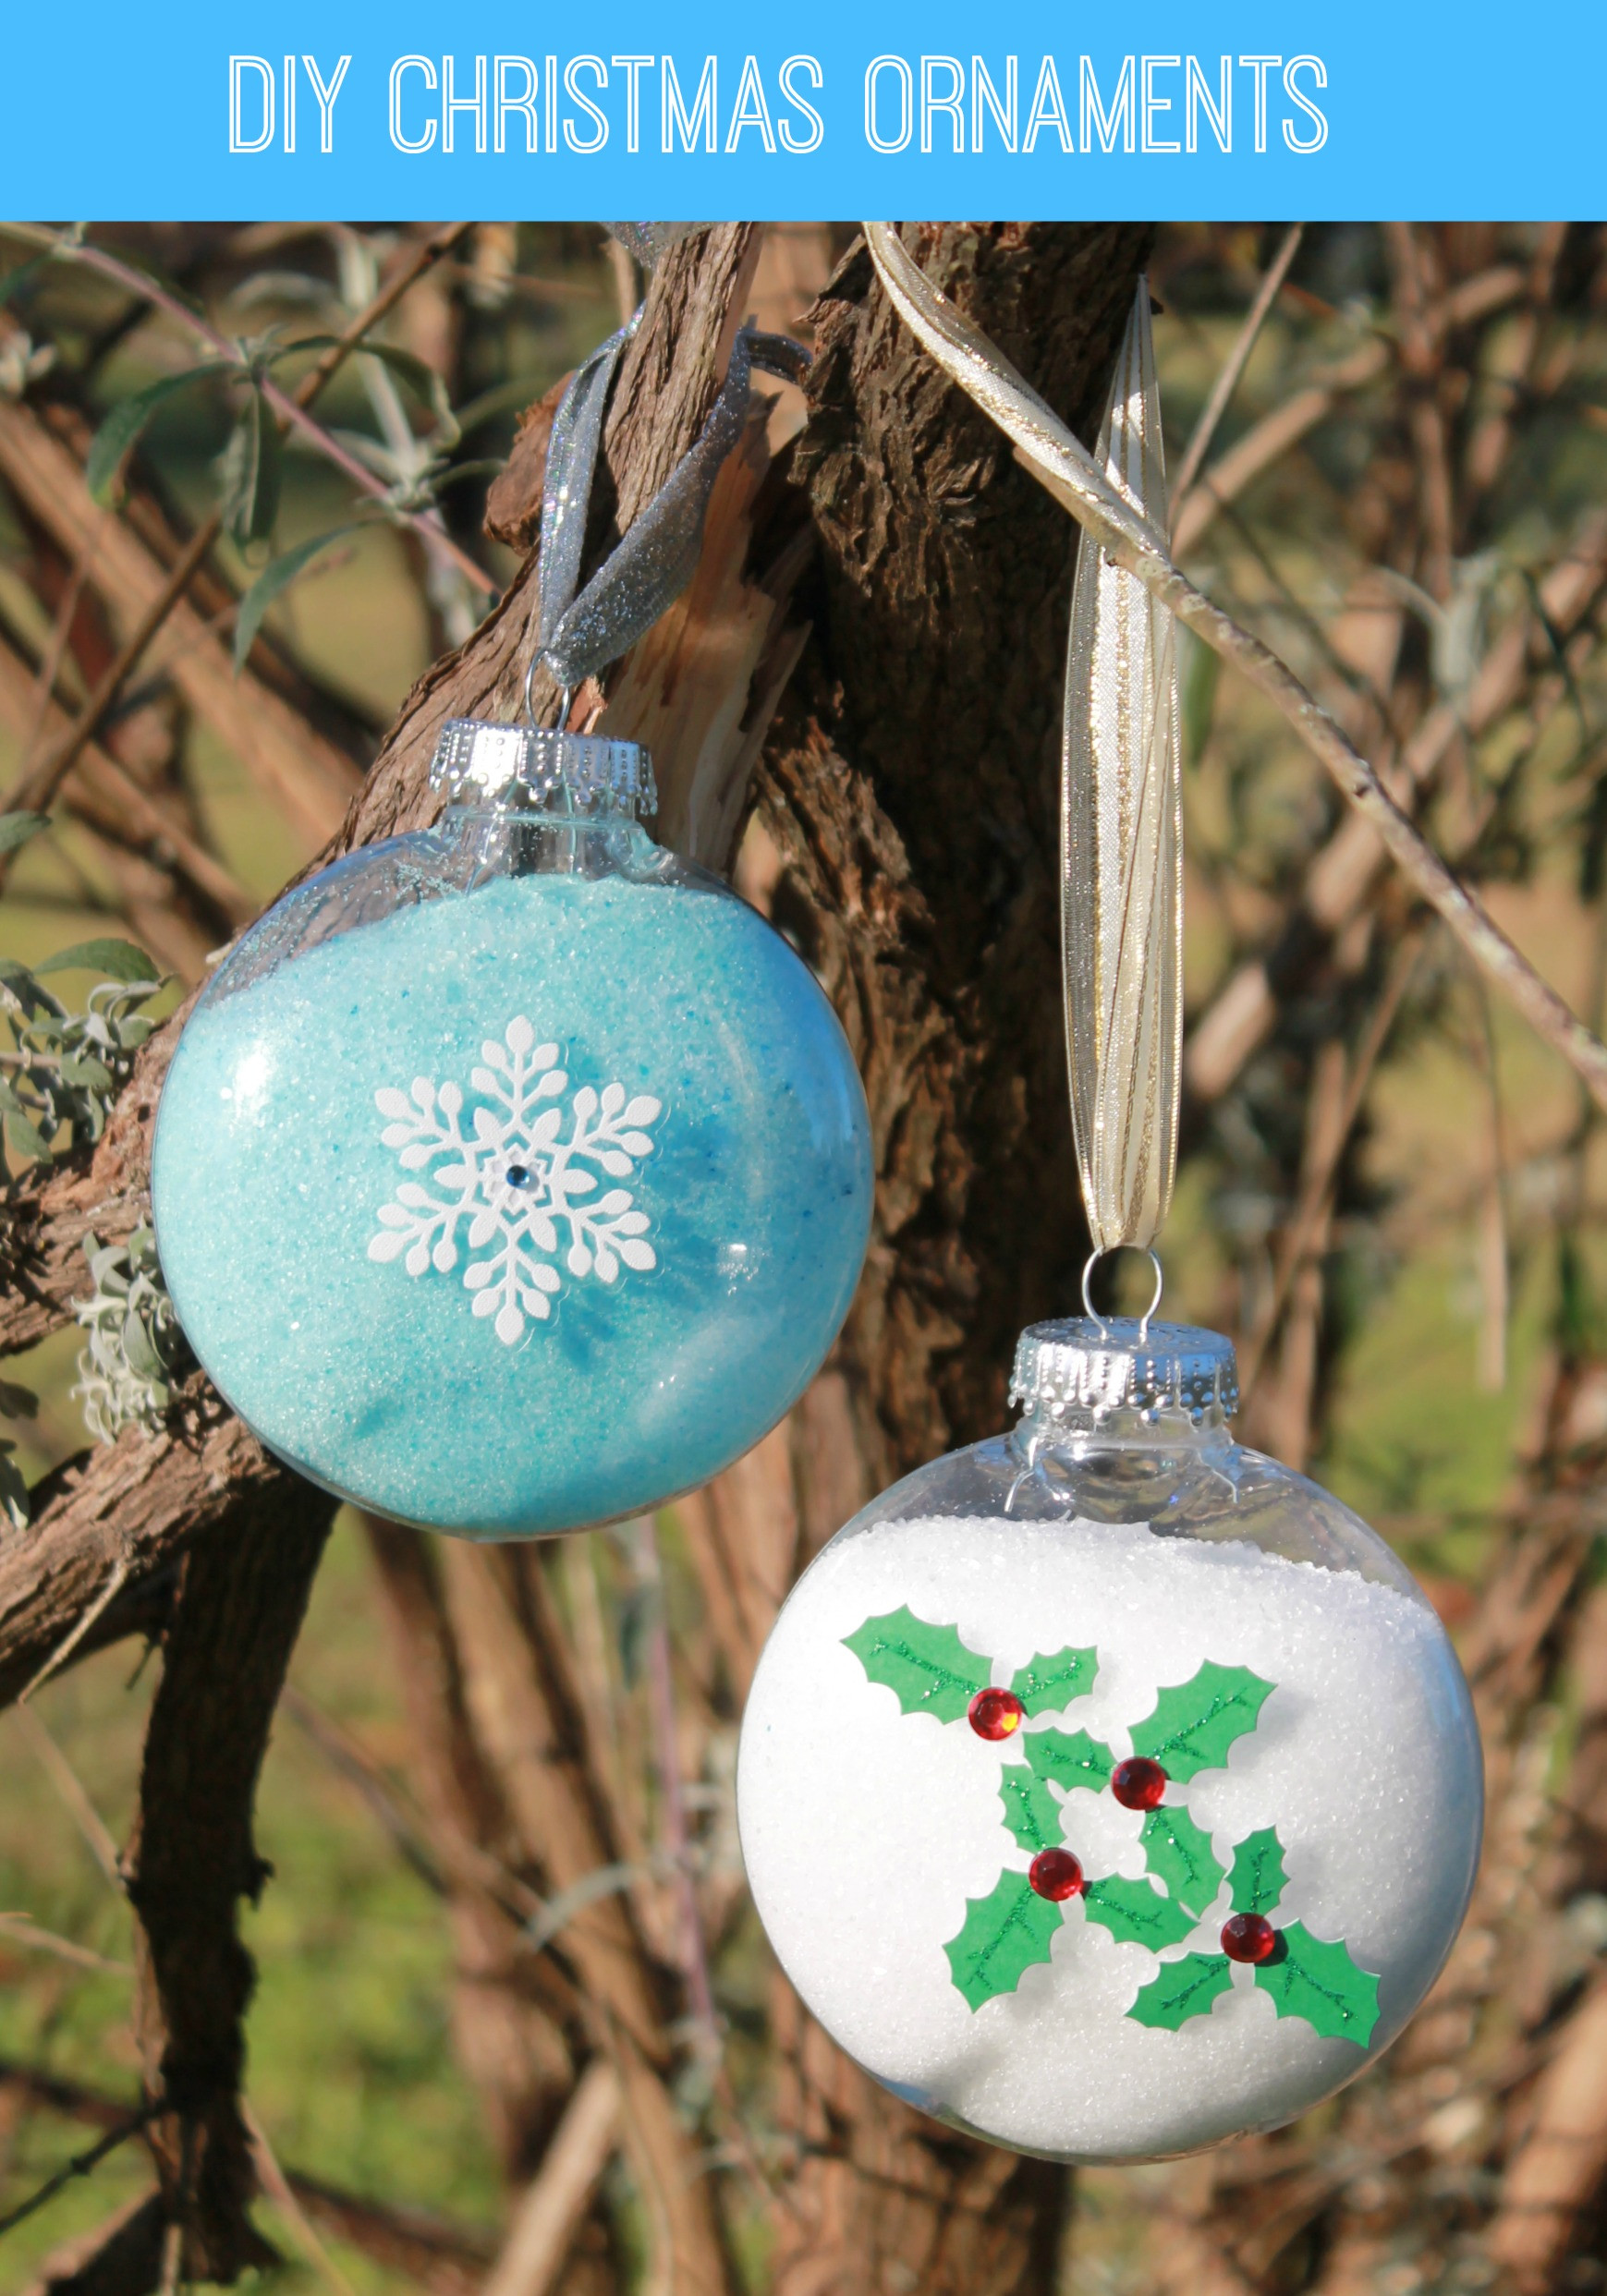 DIY Picture Christmas Ornaments
 Easy DIY Snowflake Christmas Ornament